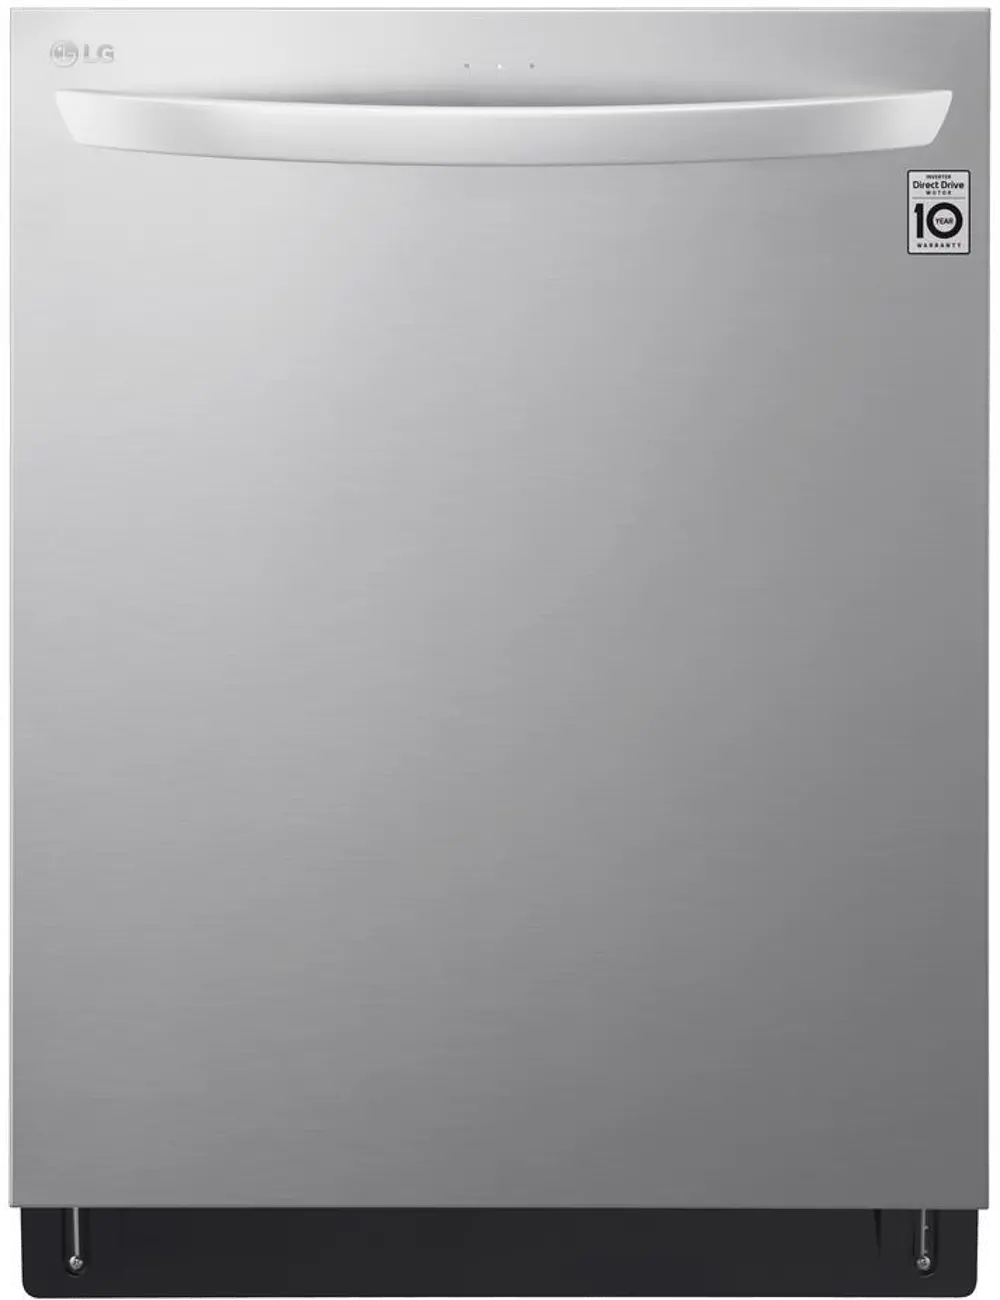 LDT7808ST LG Dishwasher  - Stainless Steel-1